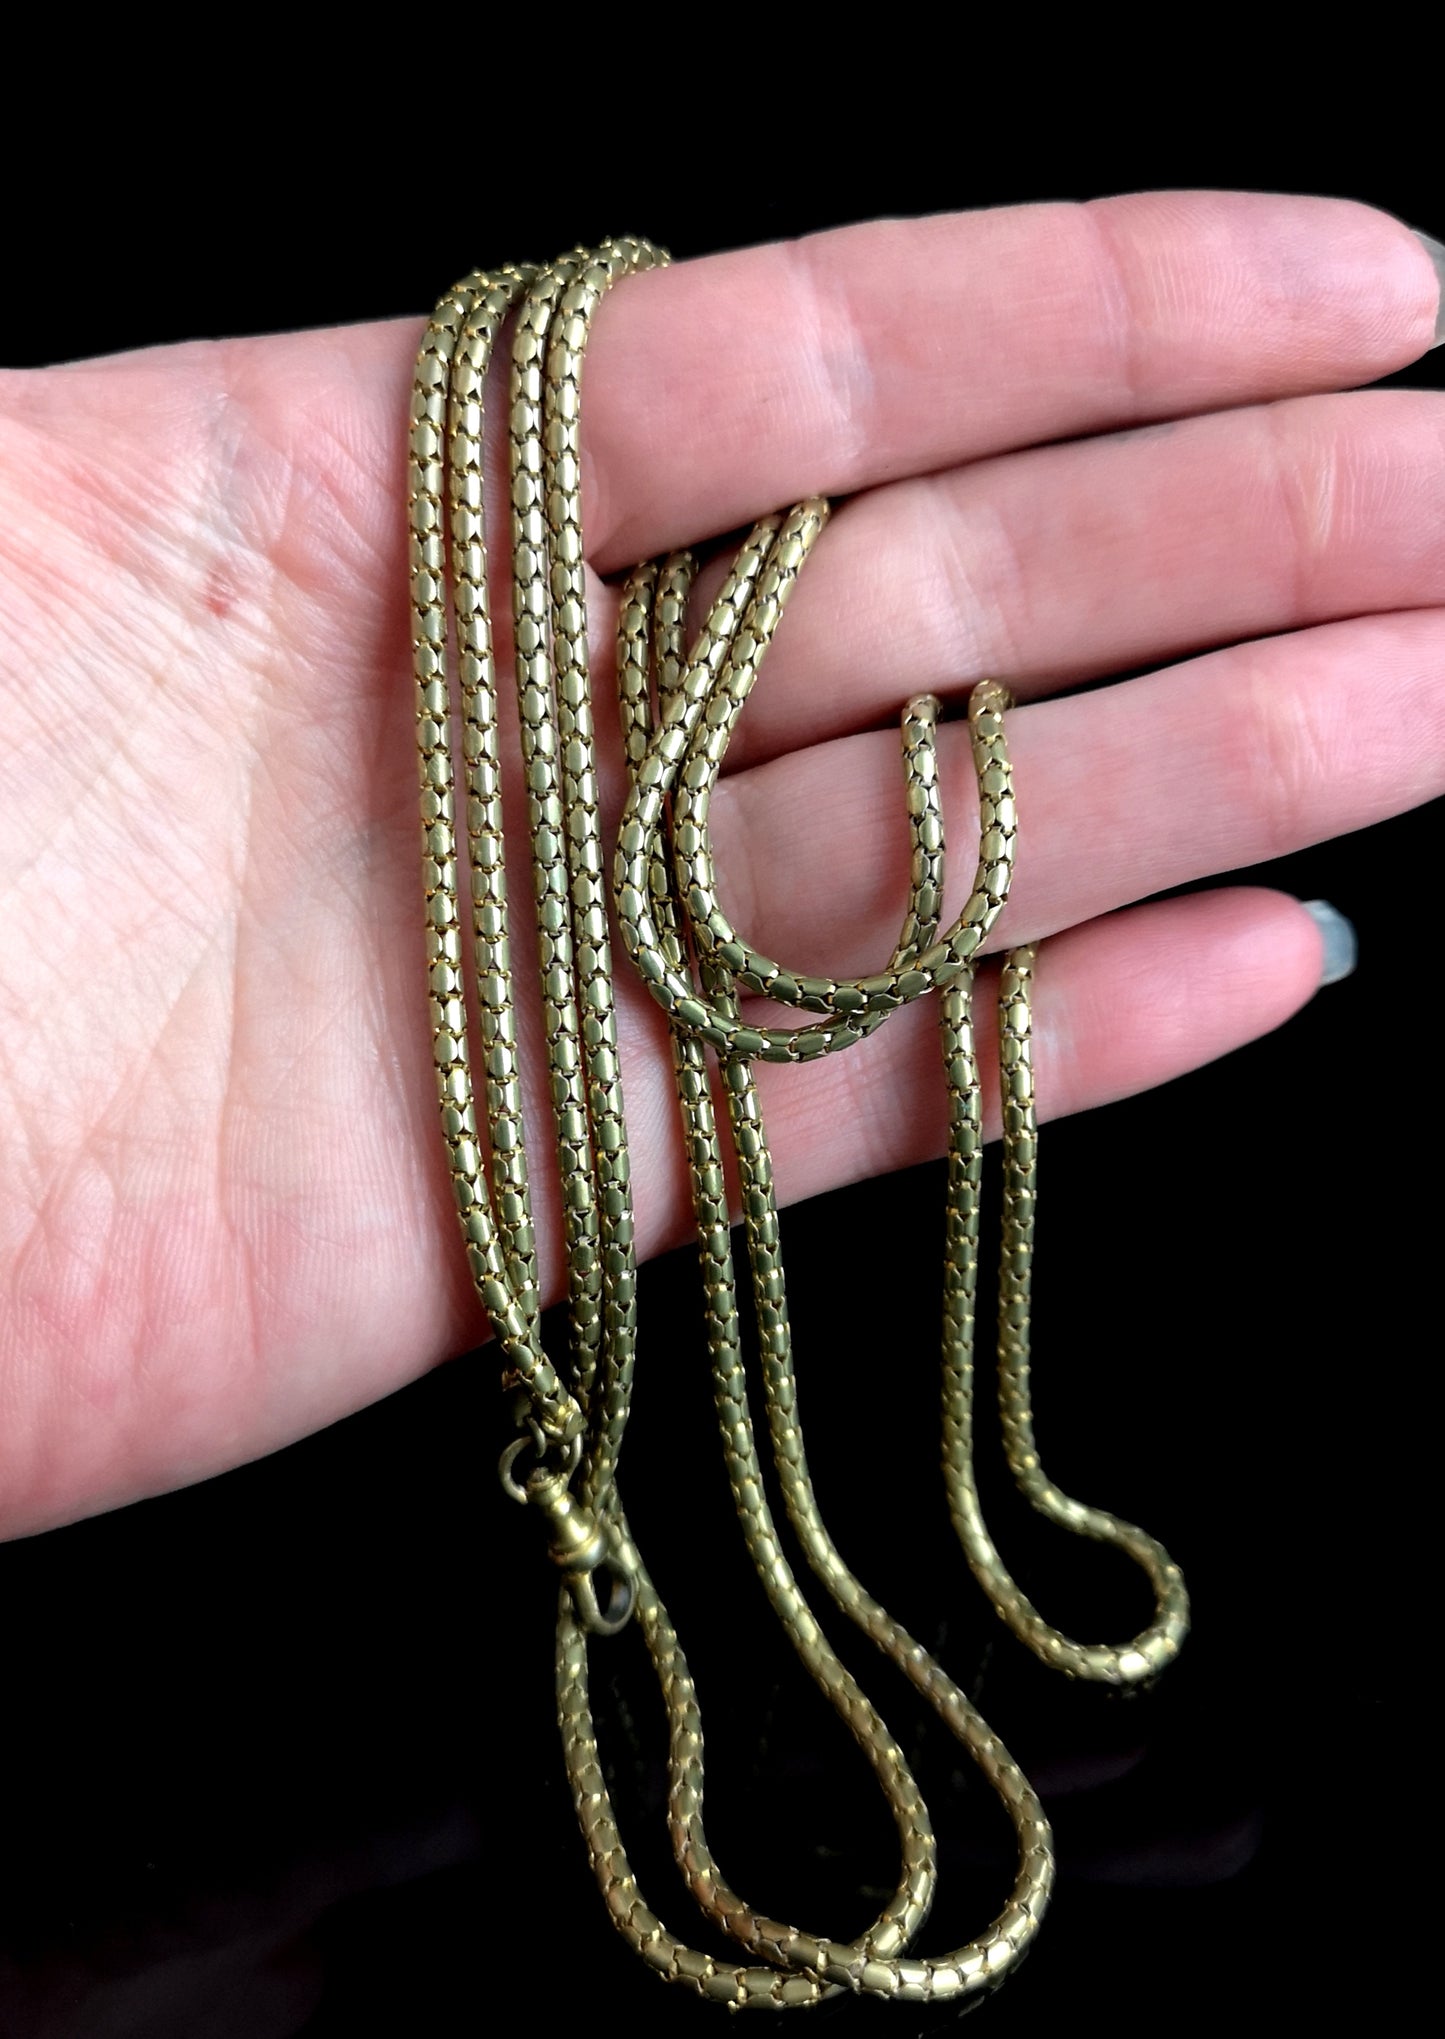 Victorian longuard chain, muff chain necklace